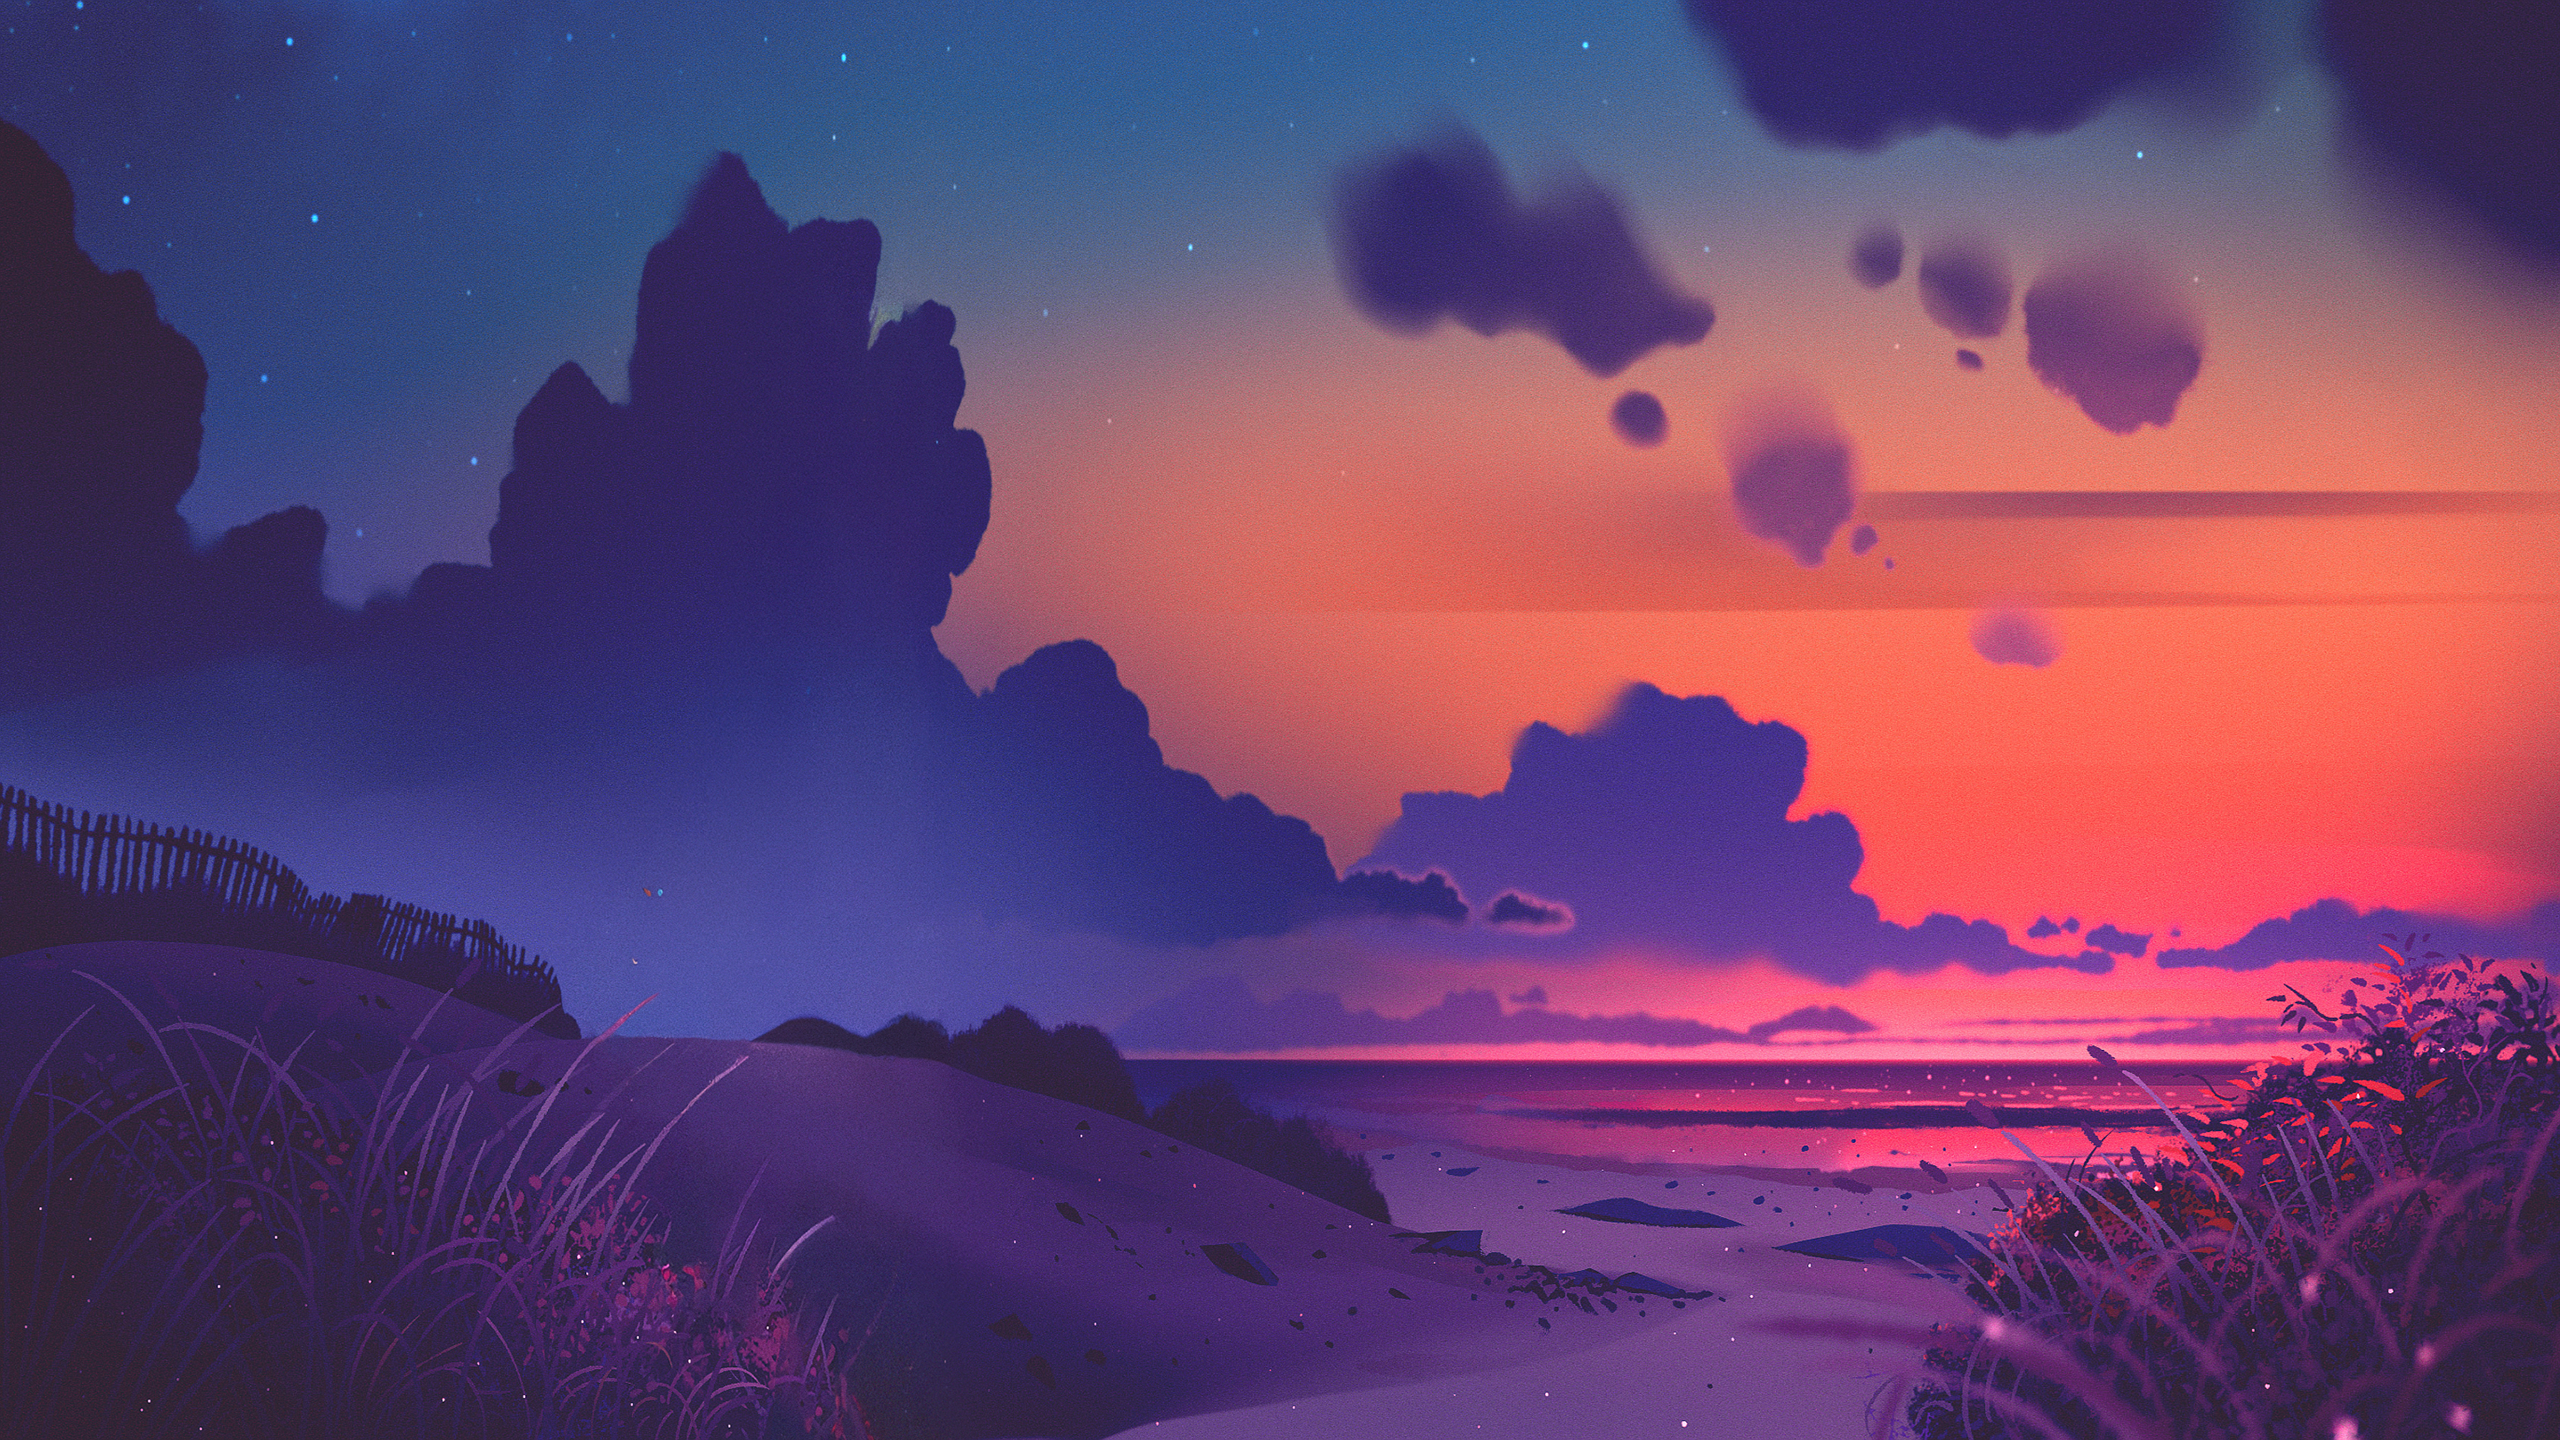 General 2560x1440 digital art artwork illustration landscape nature clouds sunset beach sea dunes sand plants SouredApple